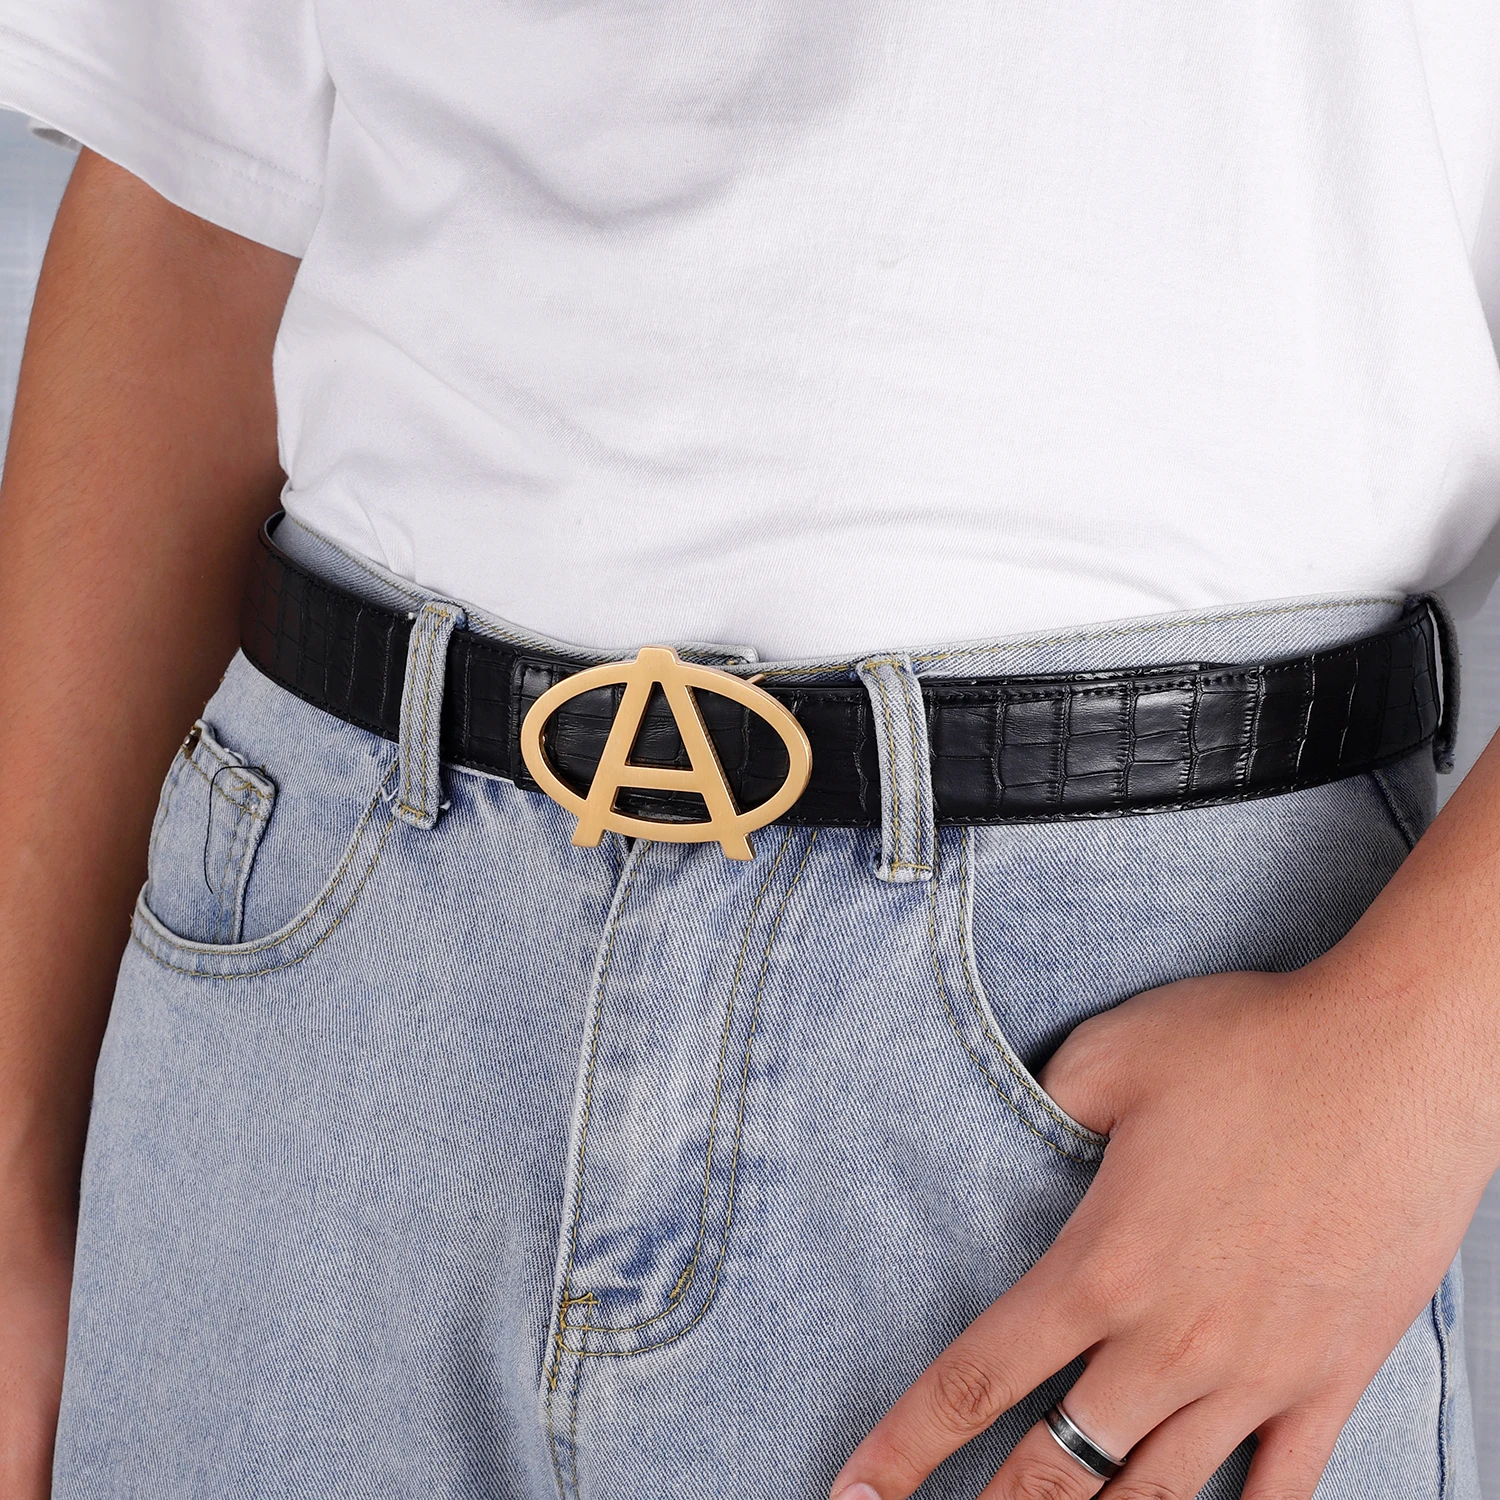 2021 New Fashion Mens Belt For Men Brand Personalized Custom Single Letter Belt Buckle Unisex Accessories Gift For Family